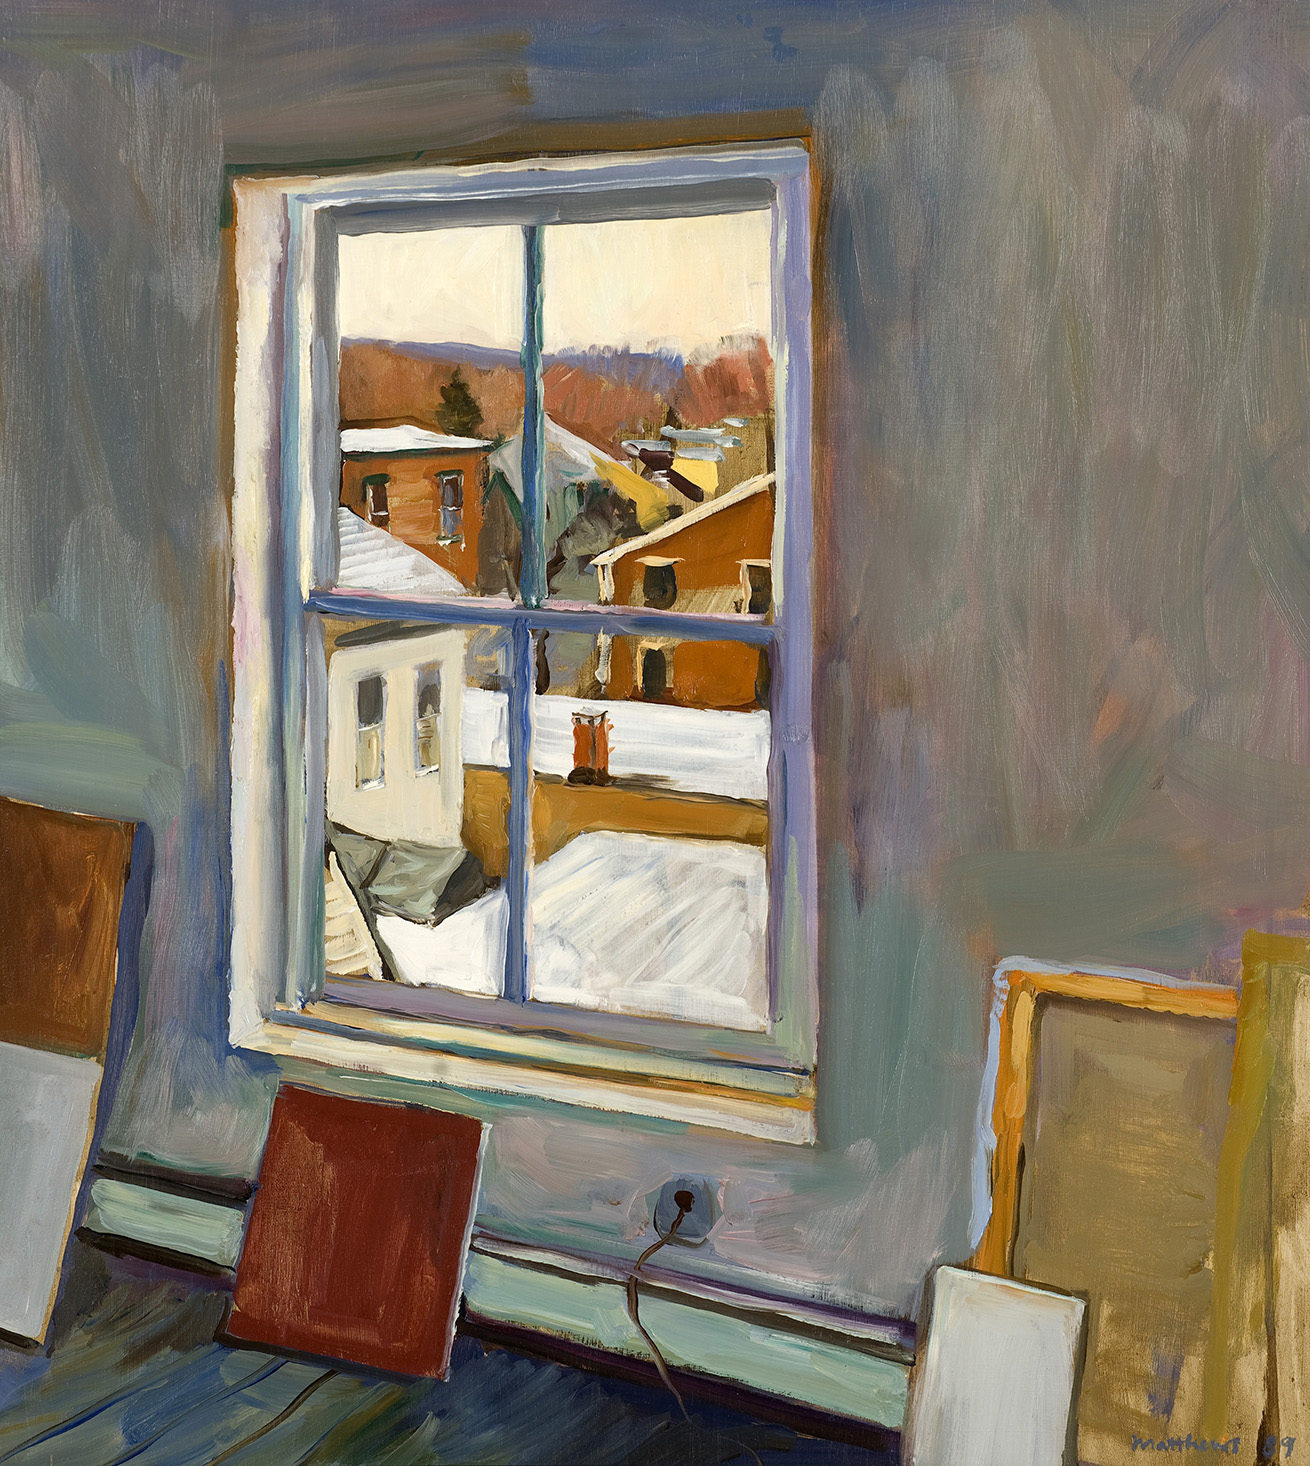  North Window; oil on board, 20 x 18